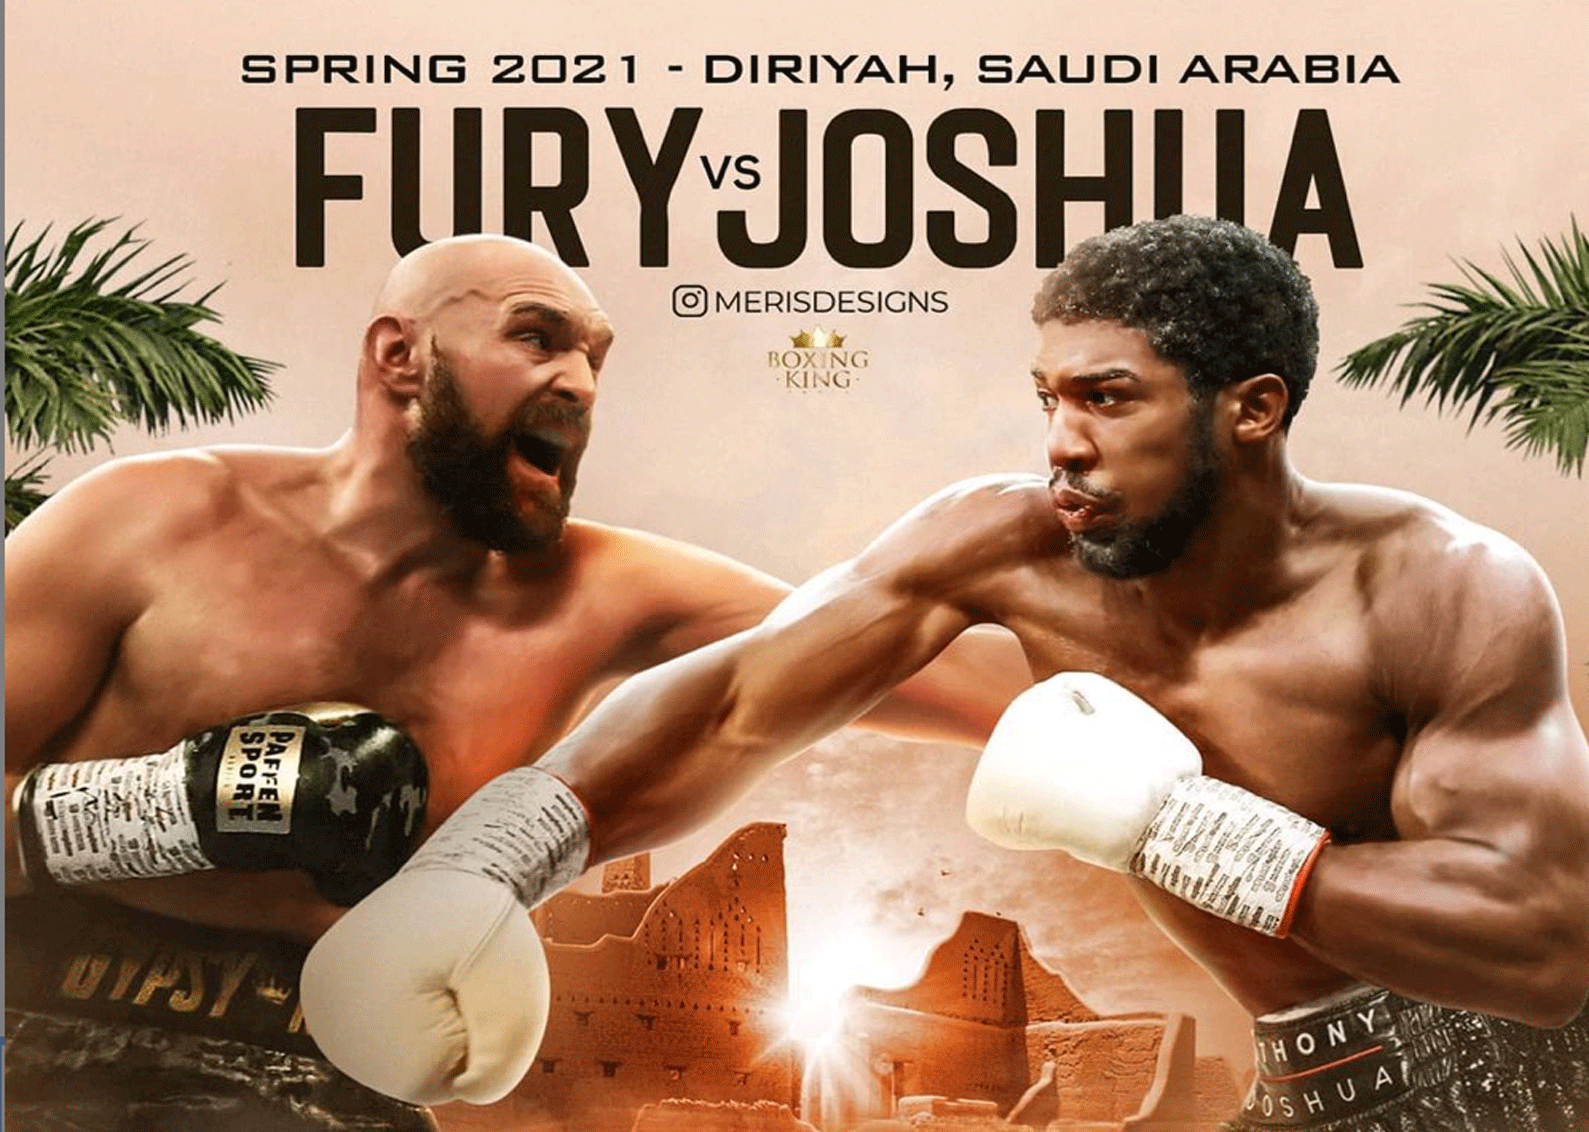 Saoedi-Arabië aast op Anthony Joshua en Tyson Fury gevecht